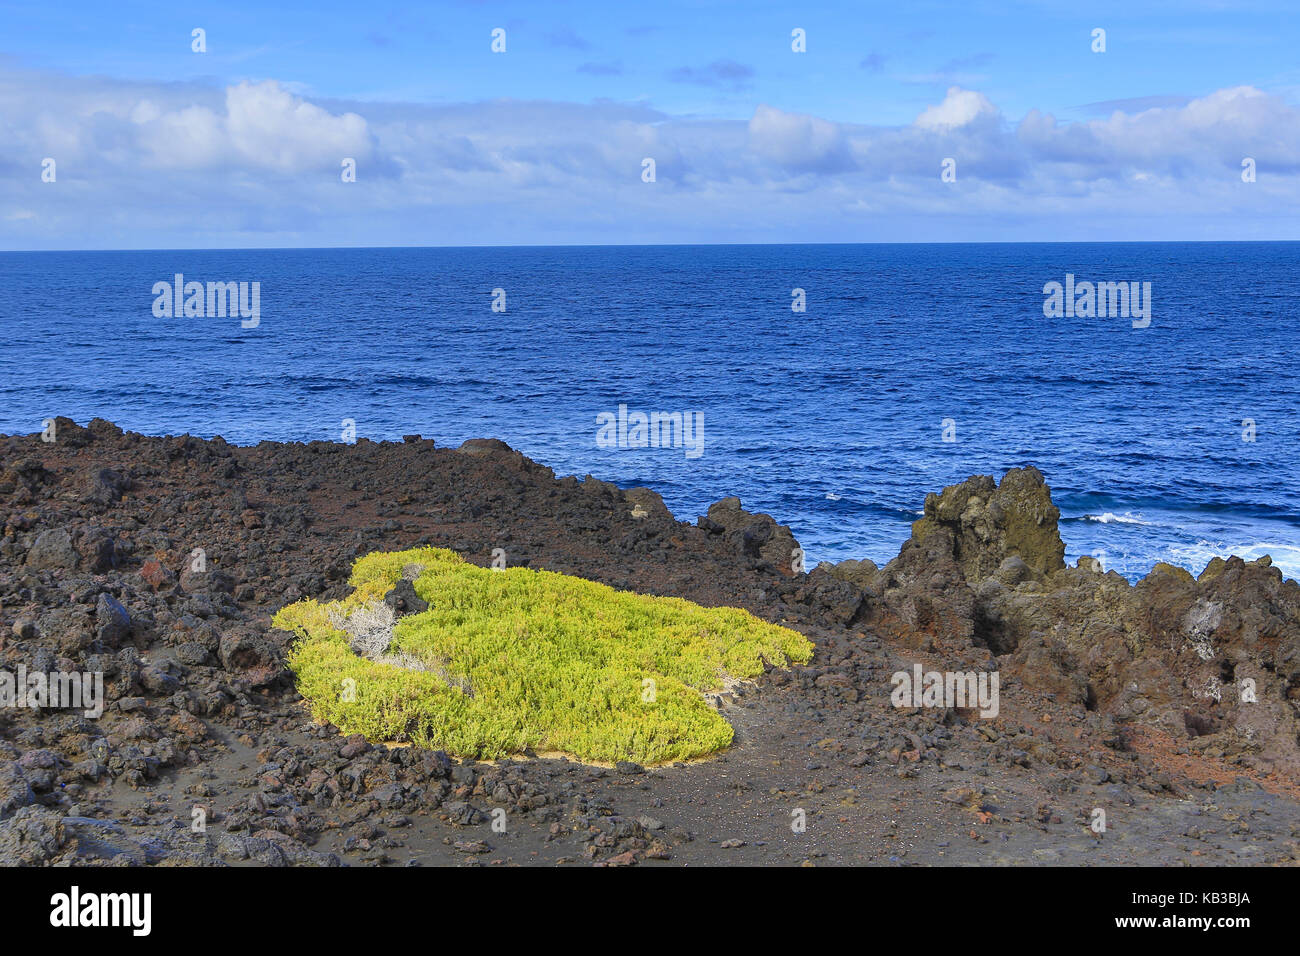 Spain, Canary islands, Lanzarote, Timanfaya national park, Los Hervideros, coast, lava rock, plants, vegetation, Stock Photo